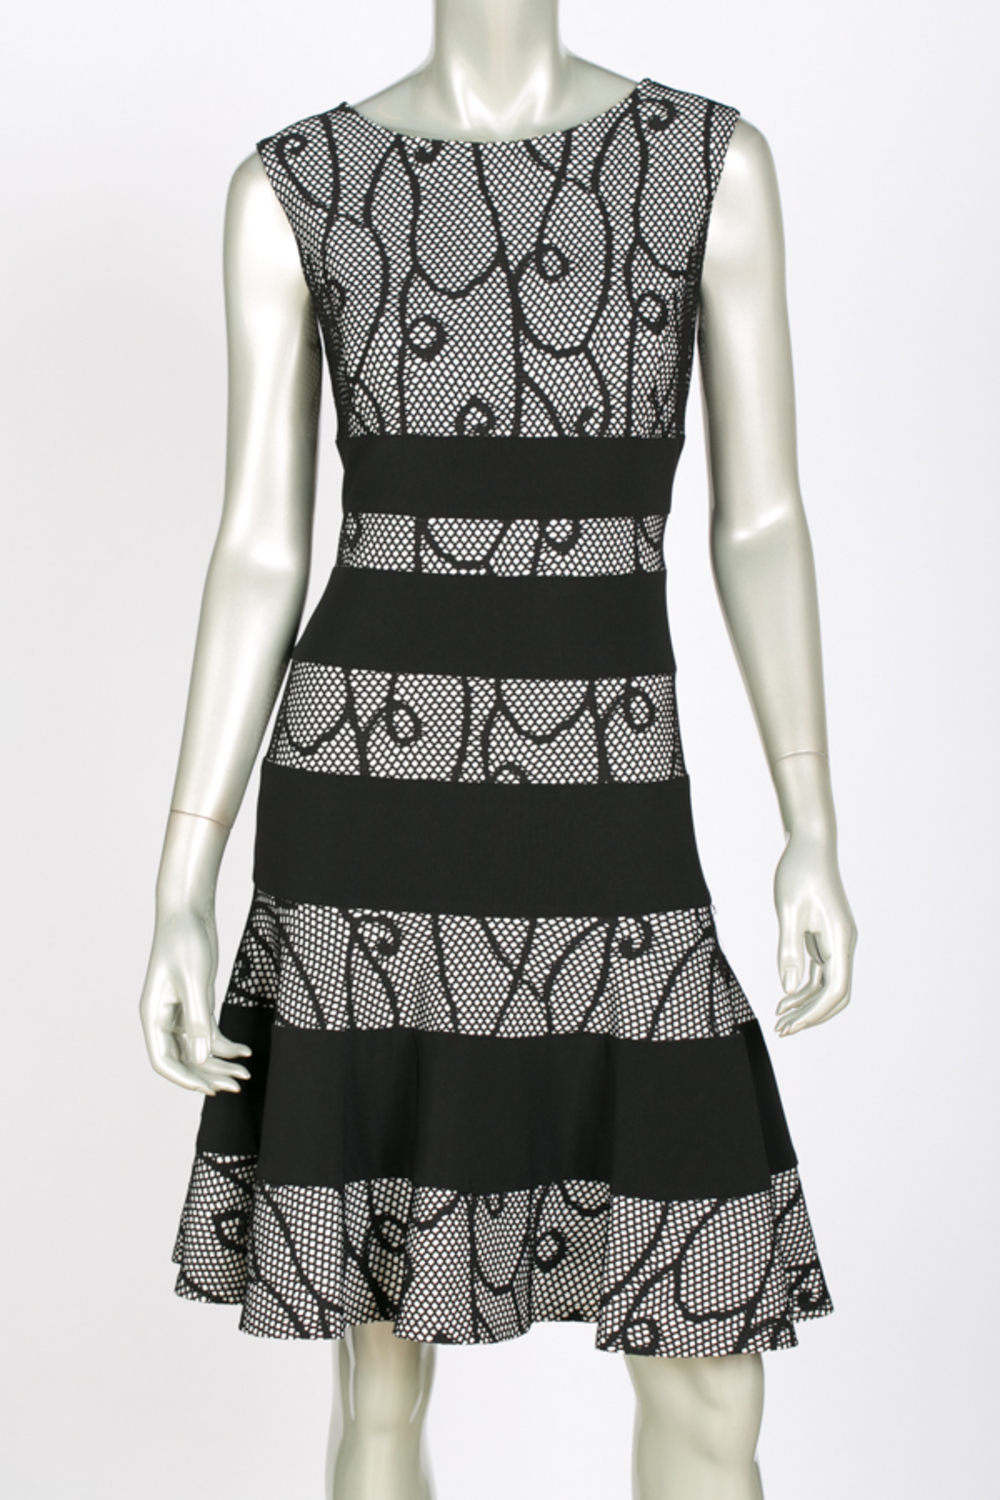 Joseph Ribkoff dress style 144838. Black/white